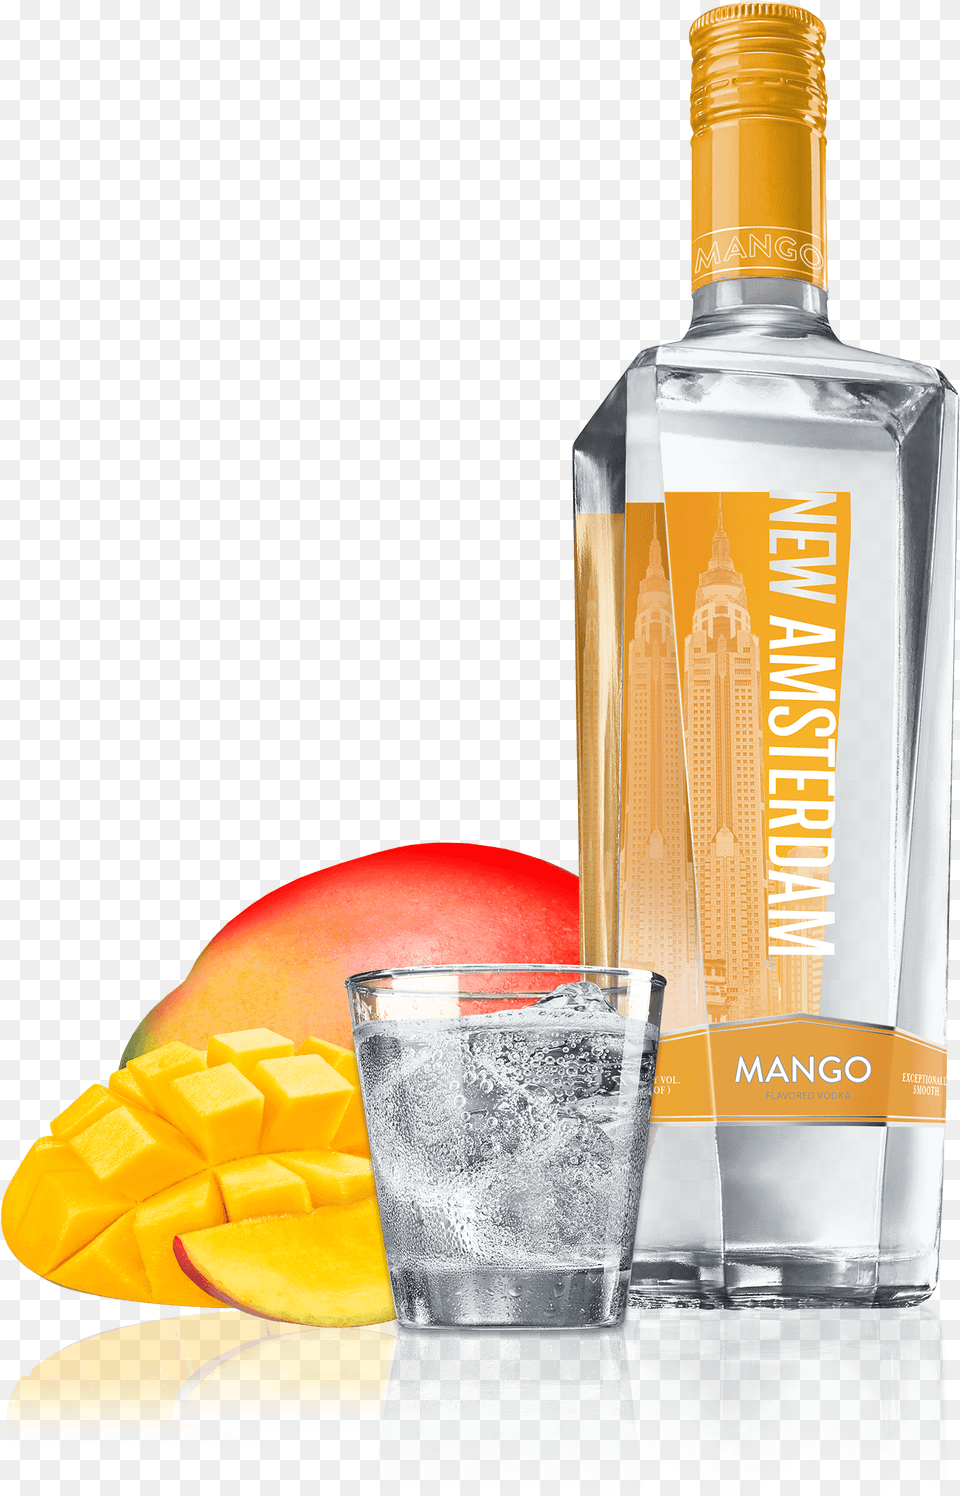 Mango Vodka New Amsterdam Vodka Coconut, Alcohol, Beverage, Liquor, Bottle Free Png Download